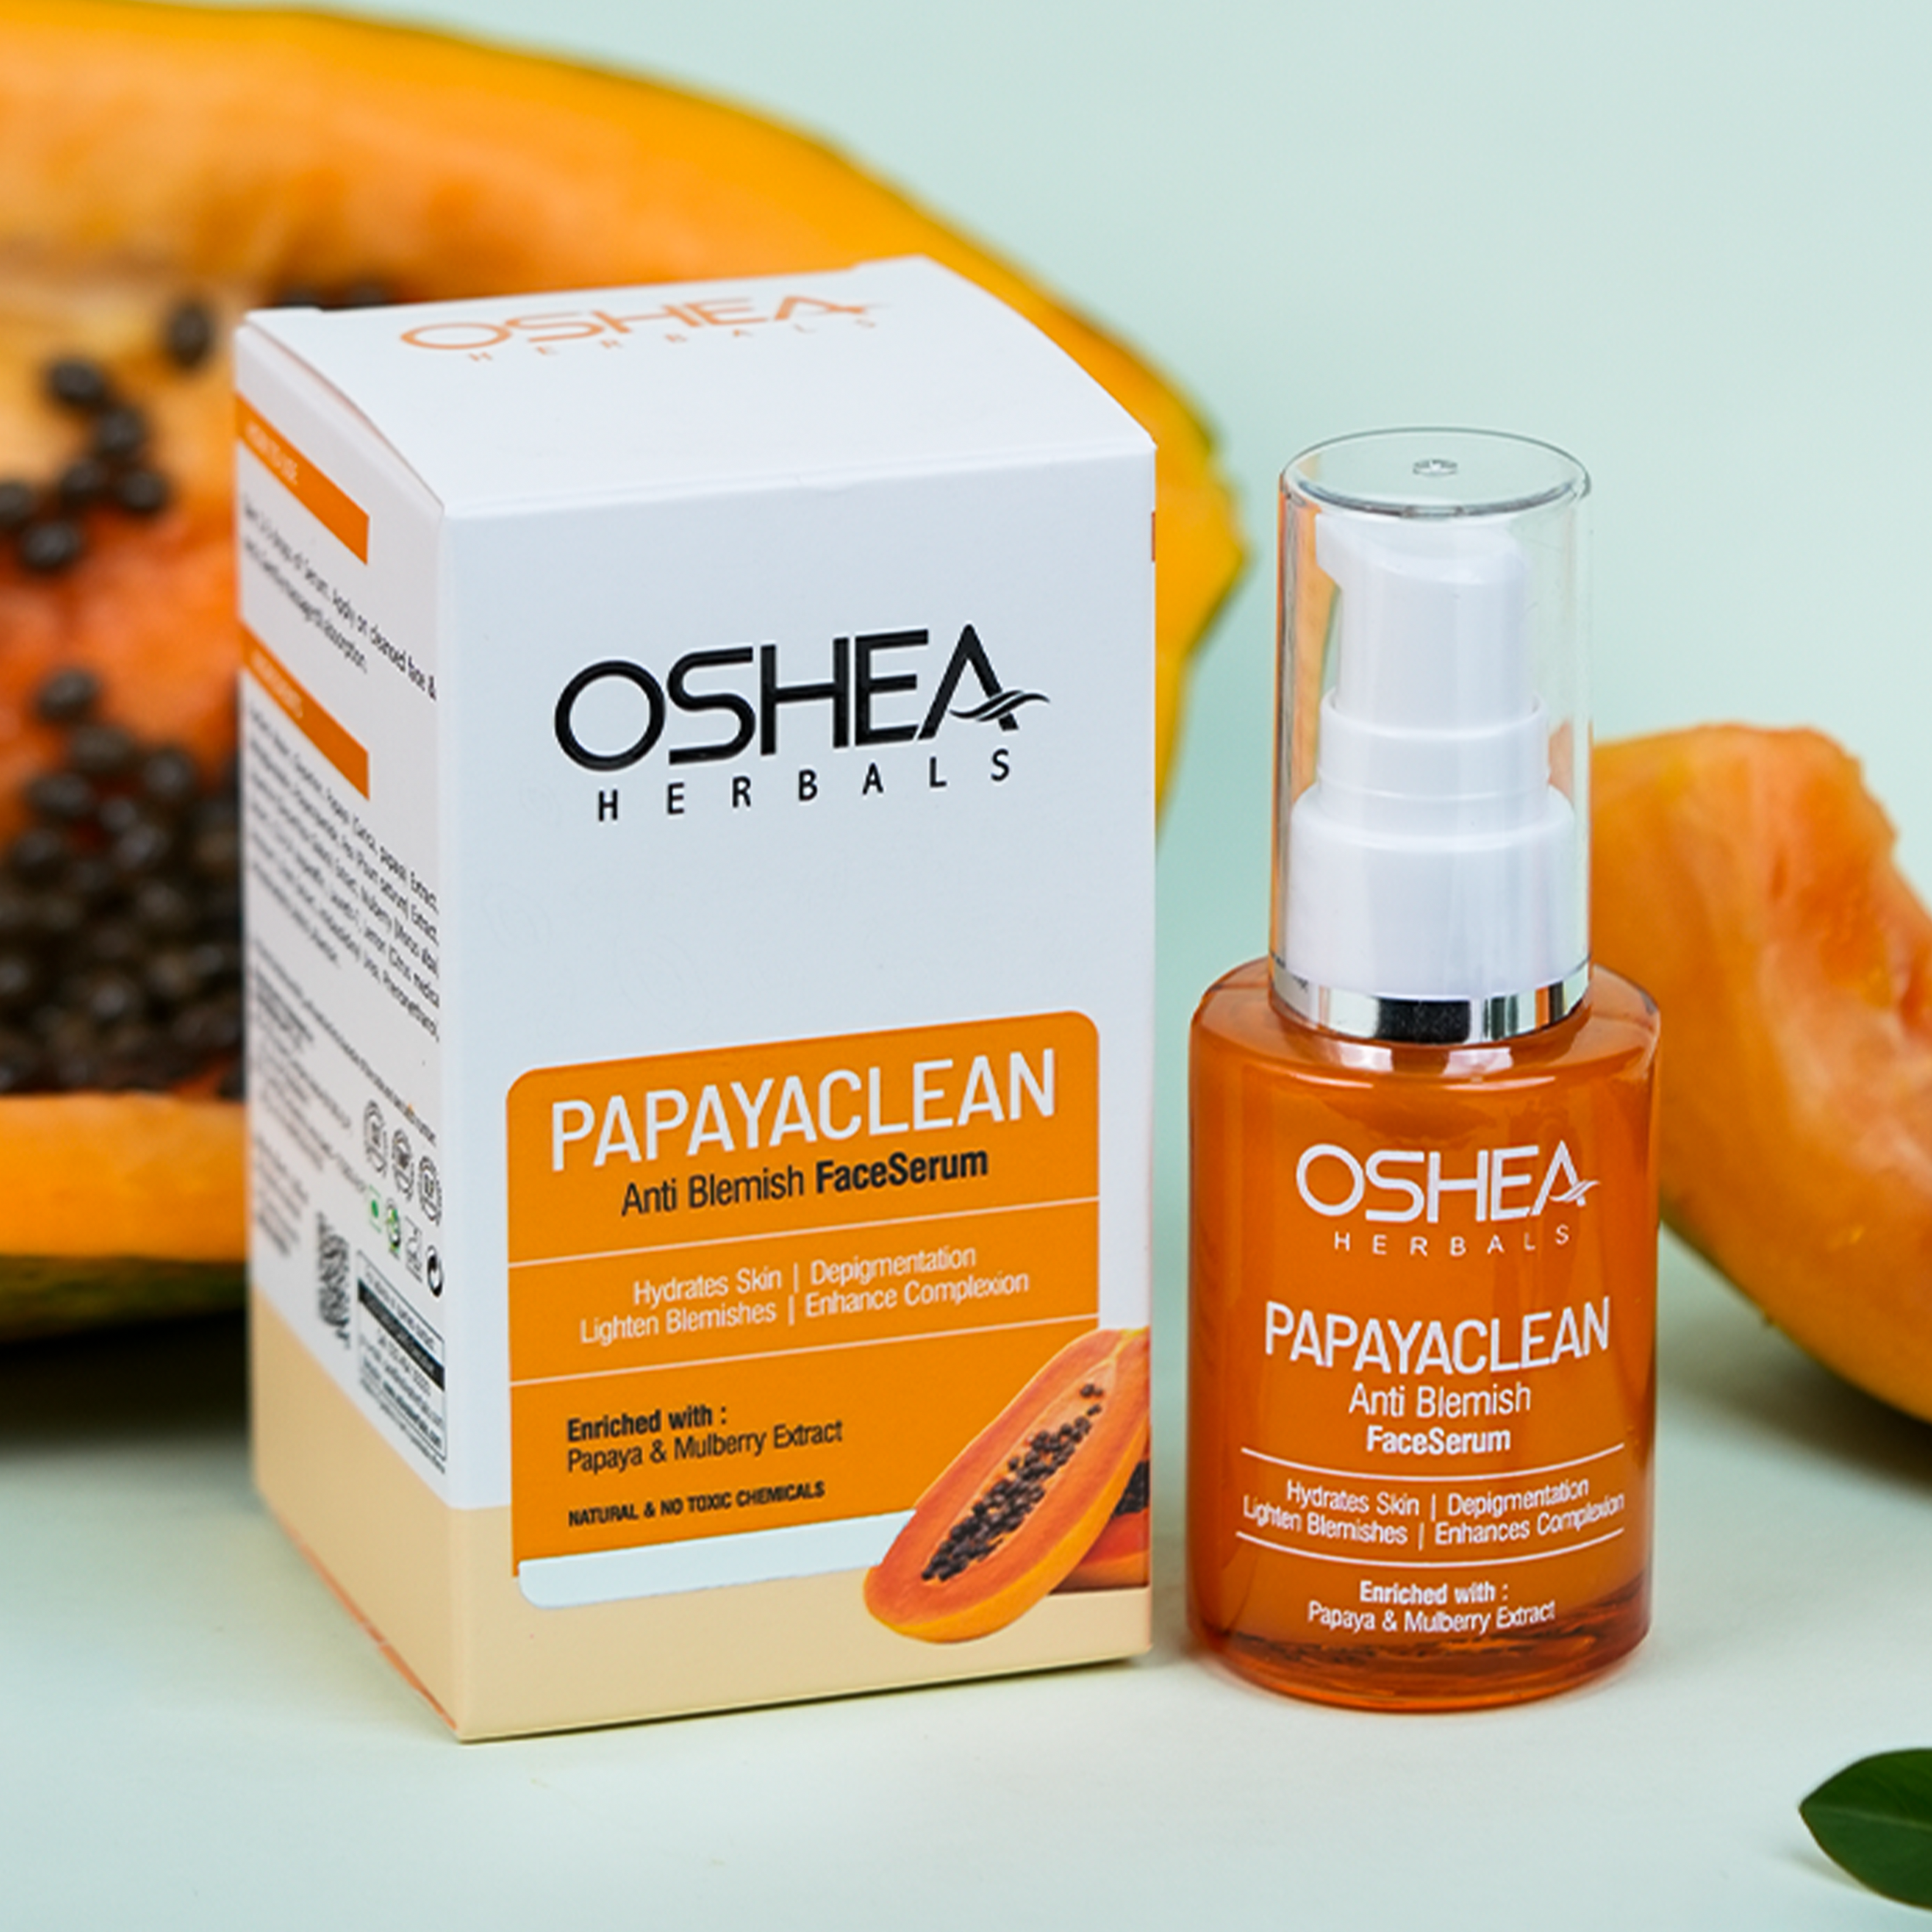 Papayaclean Anti Blemishes Face Serum Oshea Herbals